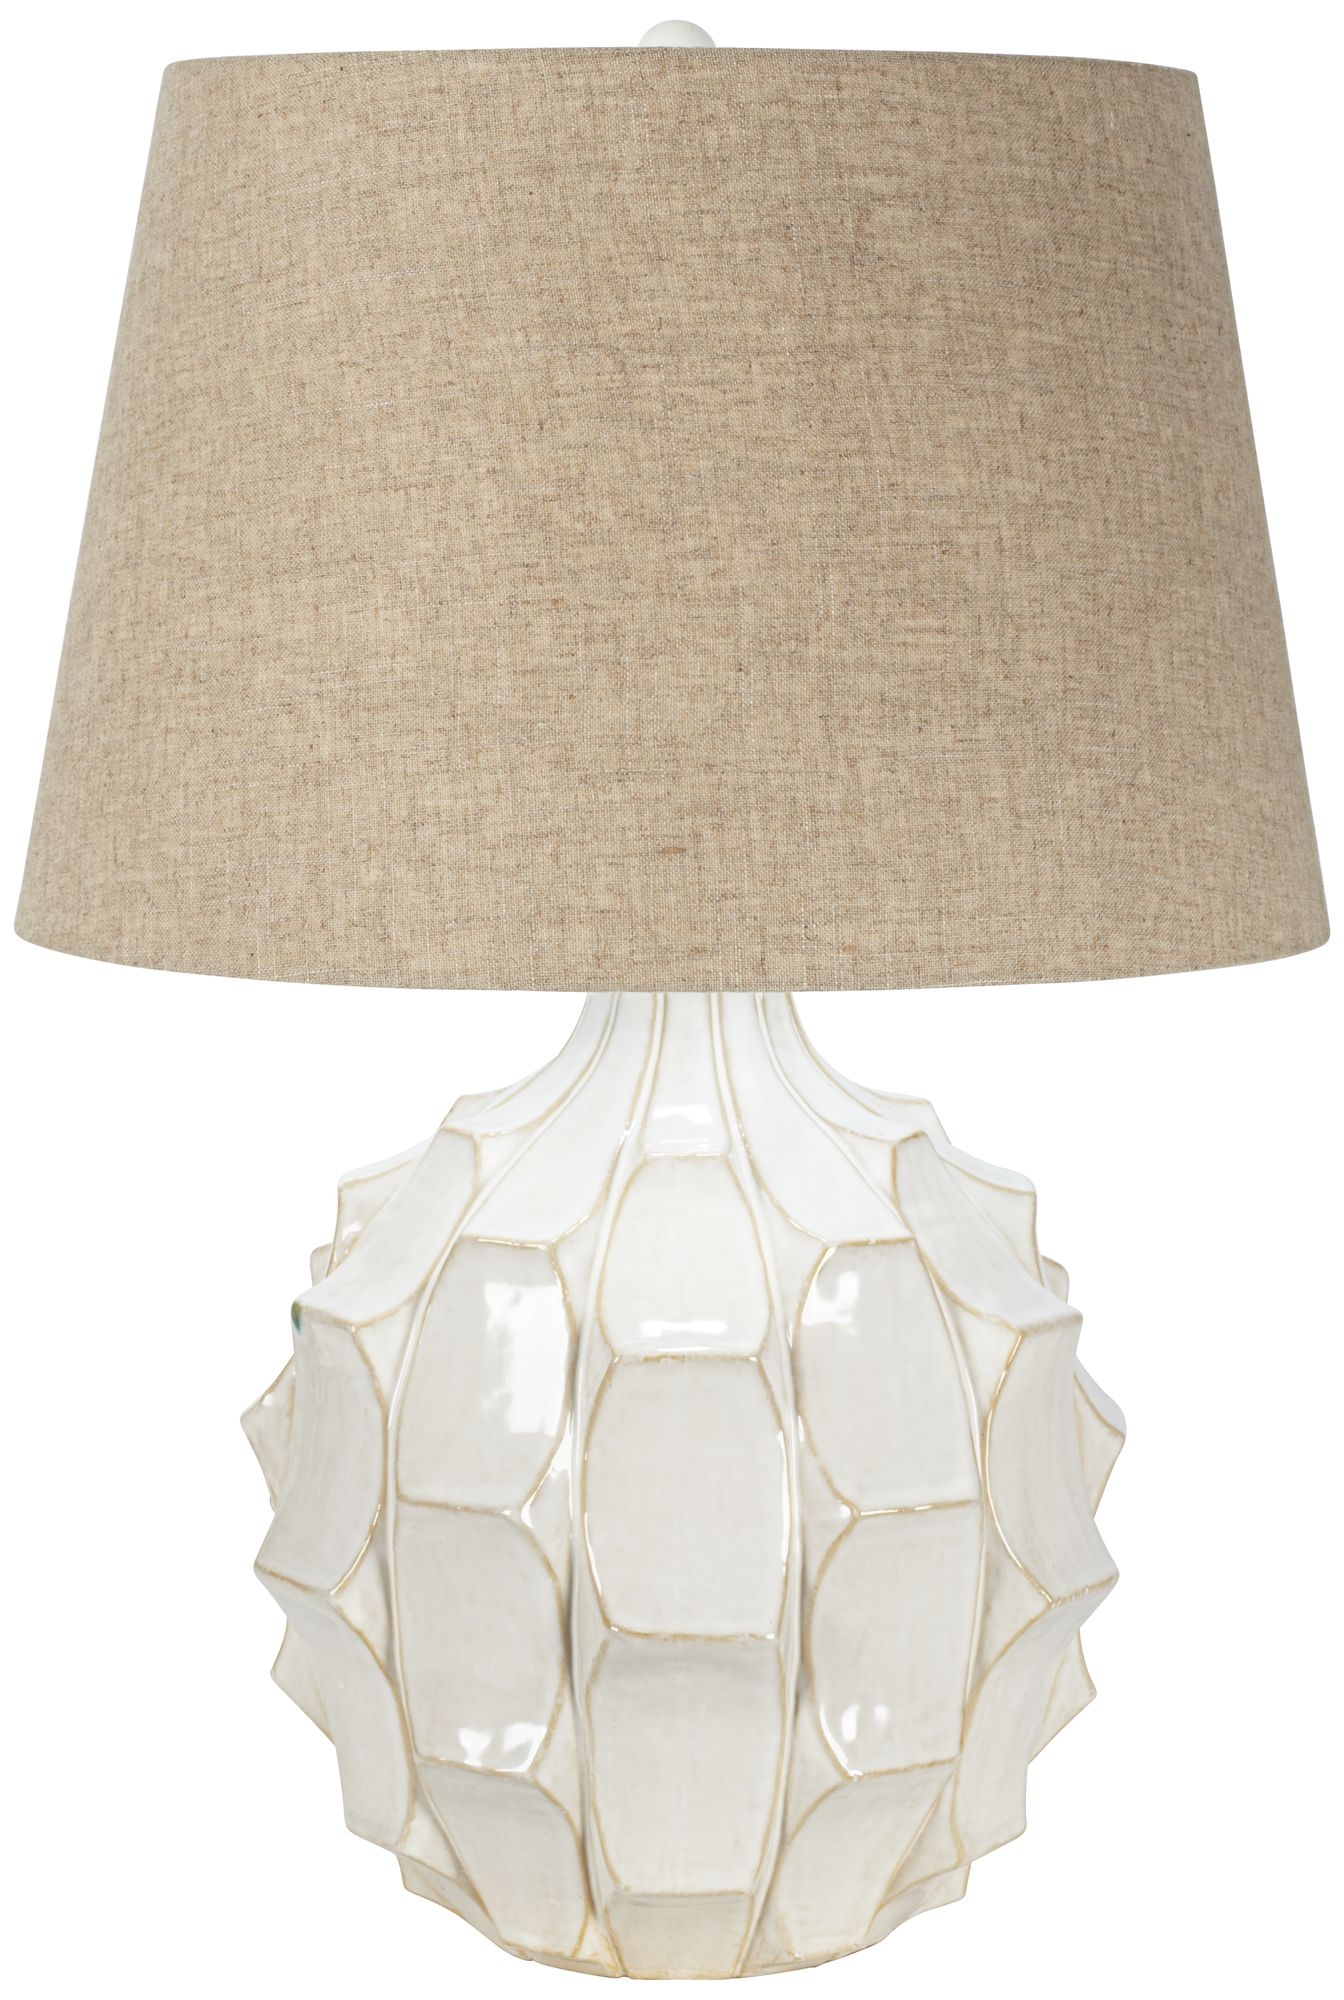 Cosgrove Mid-Century Table Lamp - Image 0